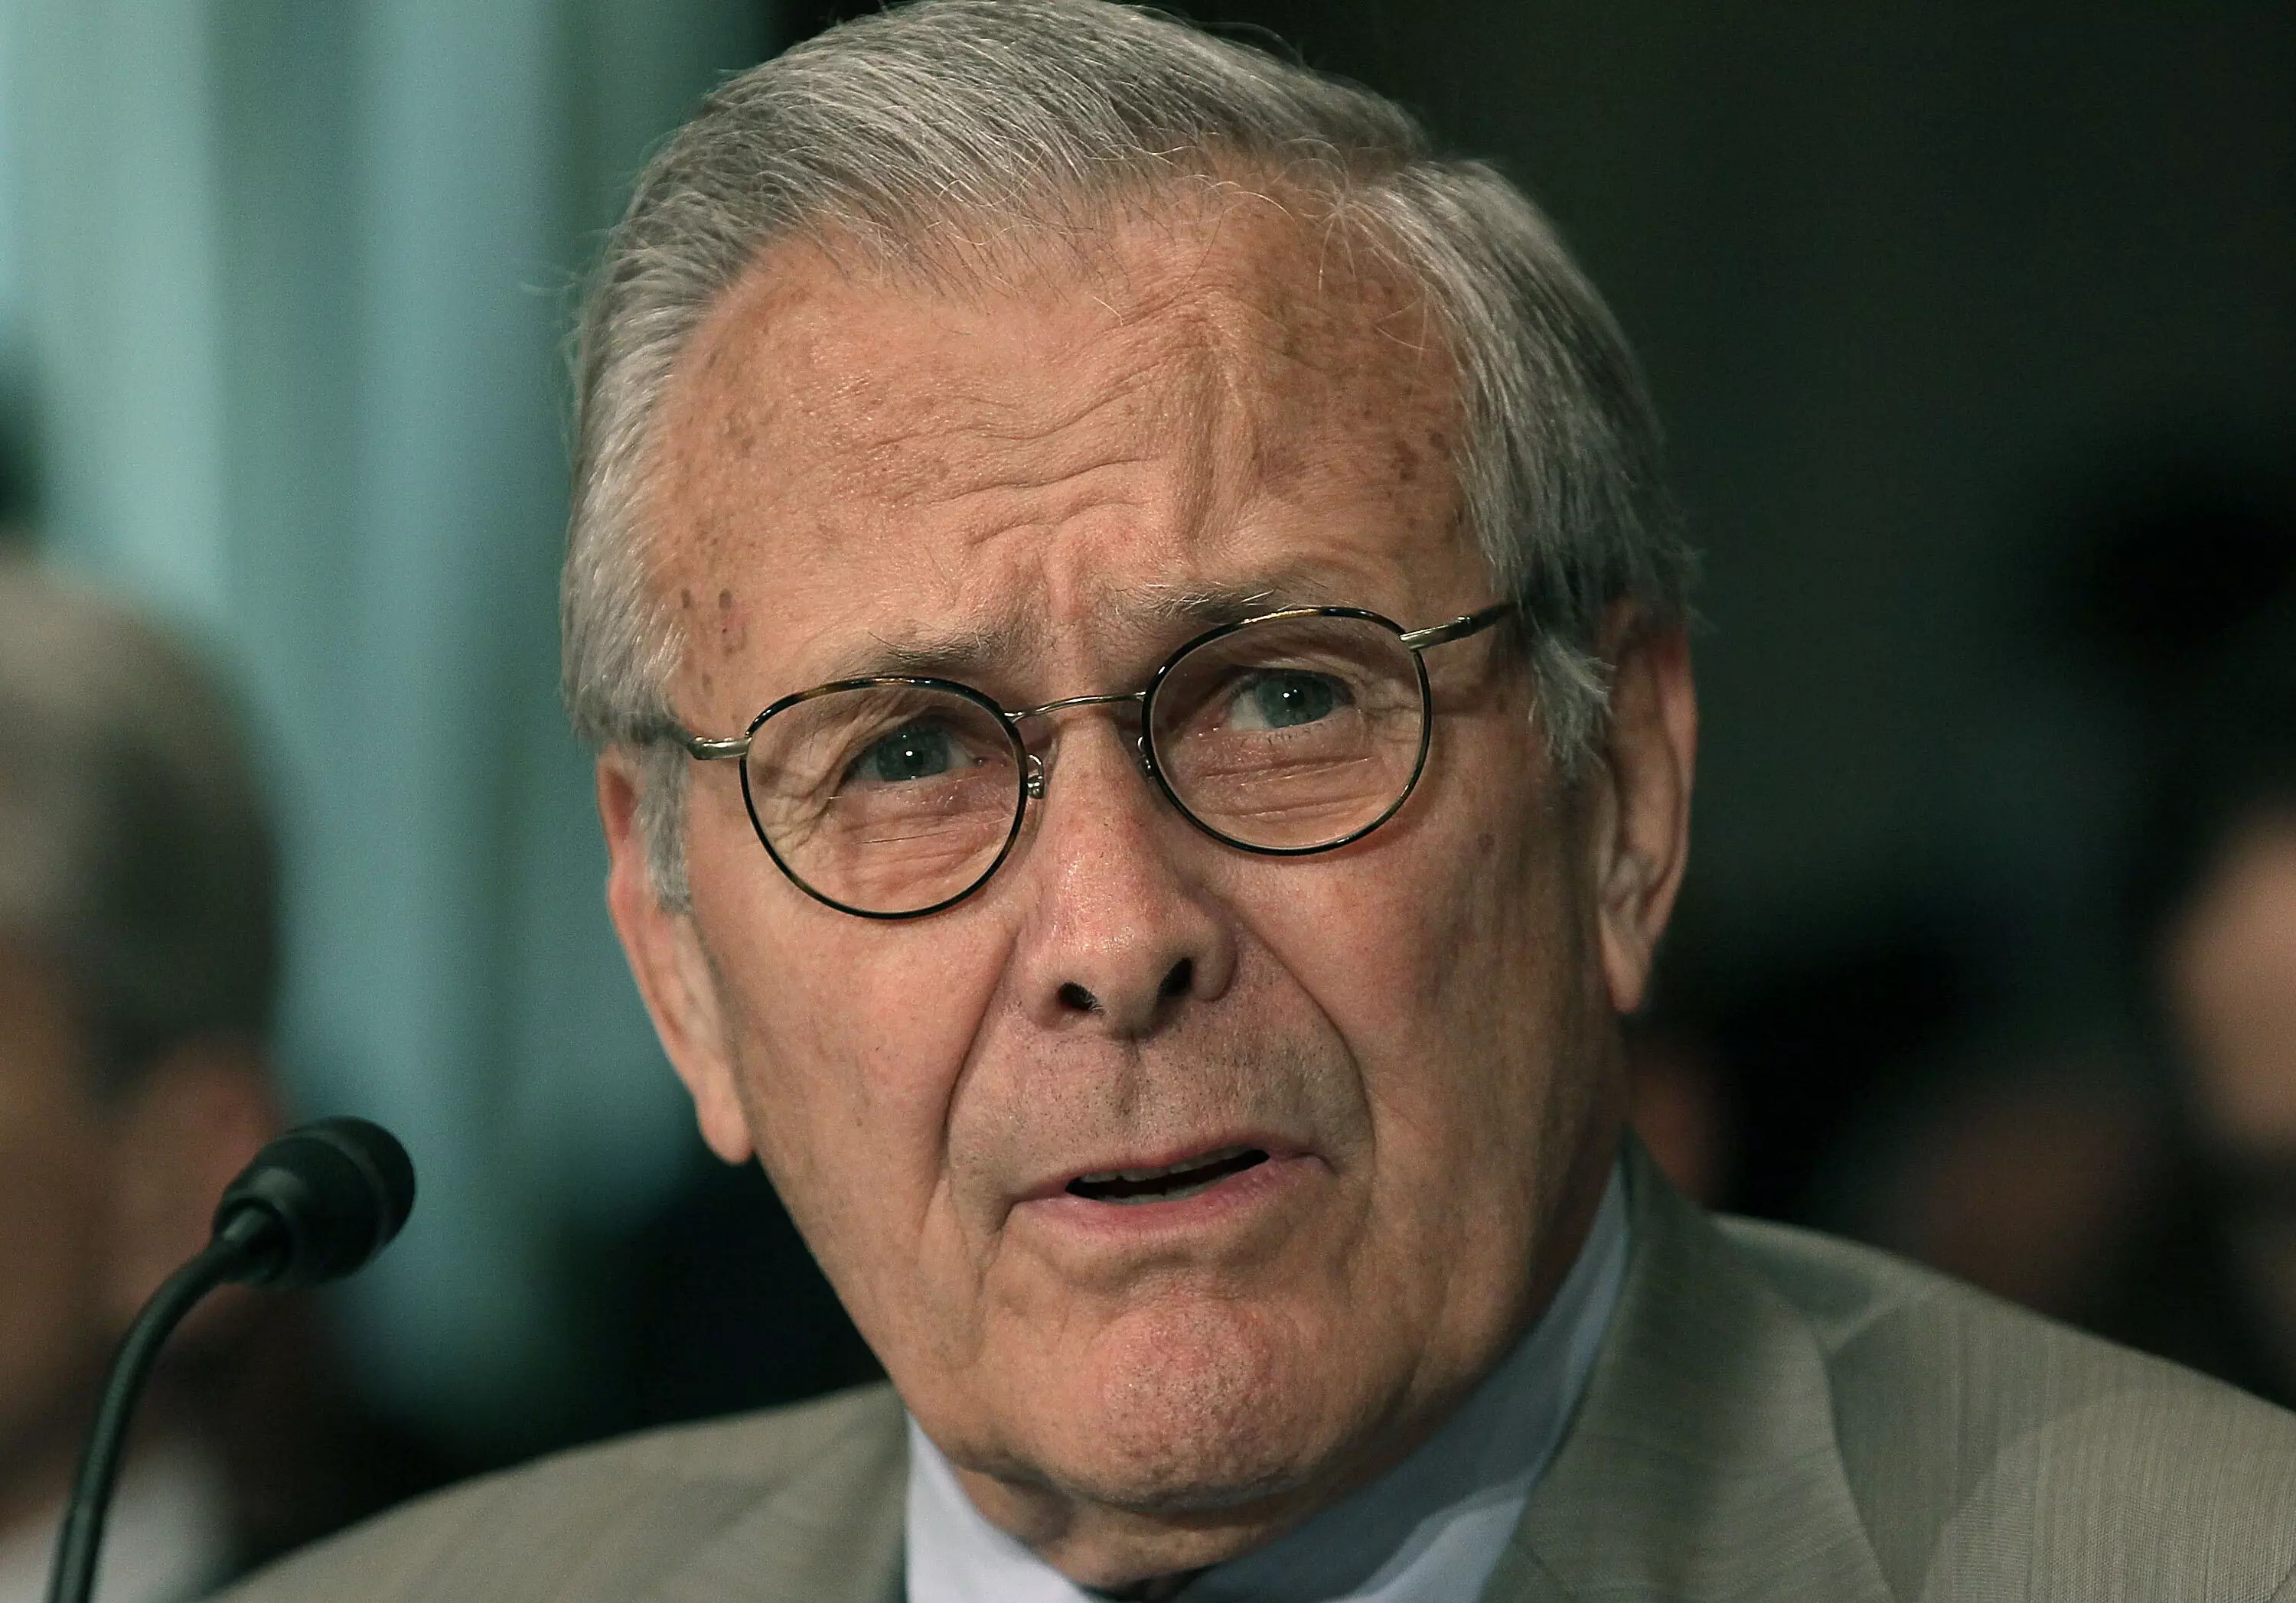 Former US Defence Secretary Donald Rumsfeld dies at 88